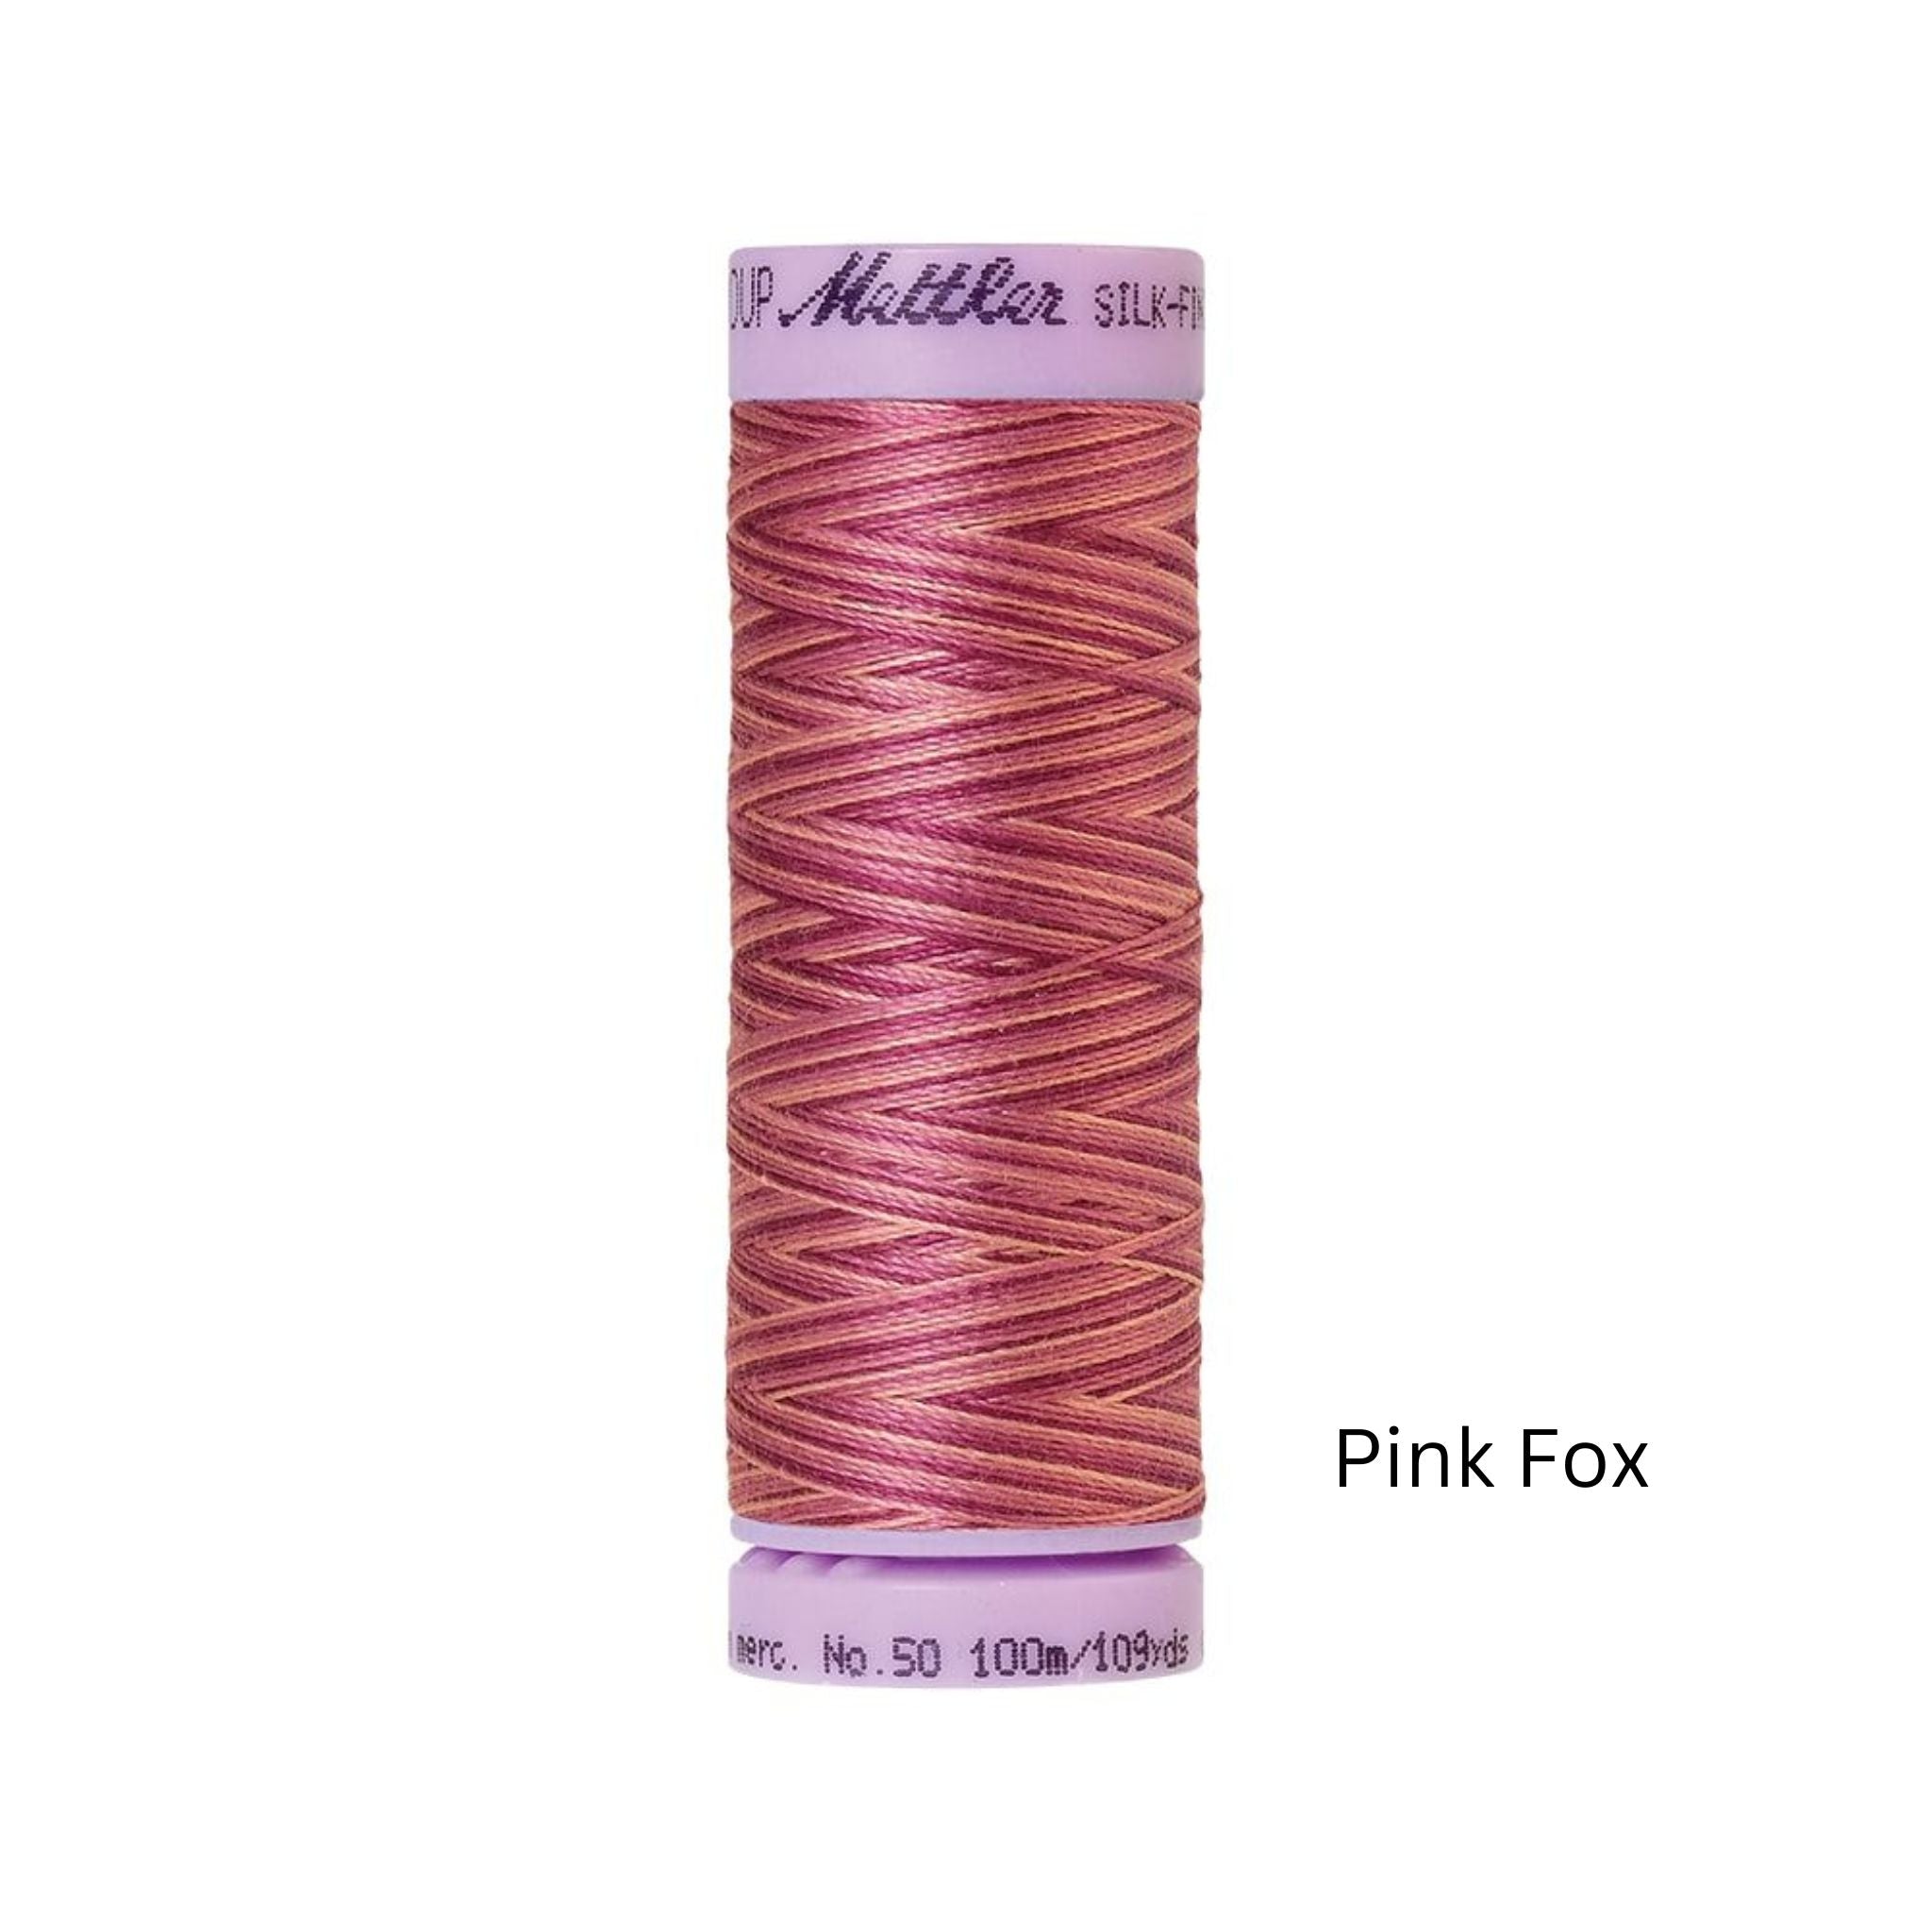 Pink Fox Silk Thread Finish Multi Colour Cot 50 100m - 9839 Mettler